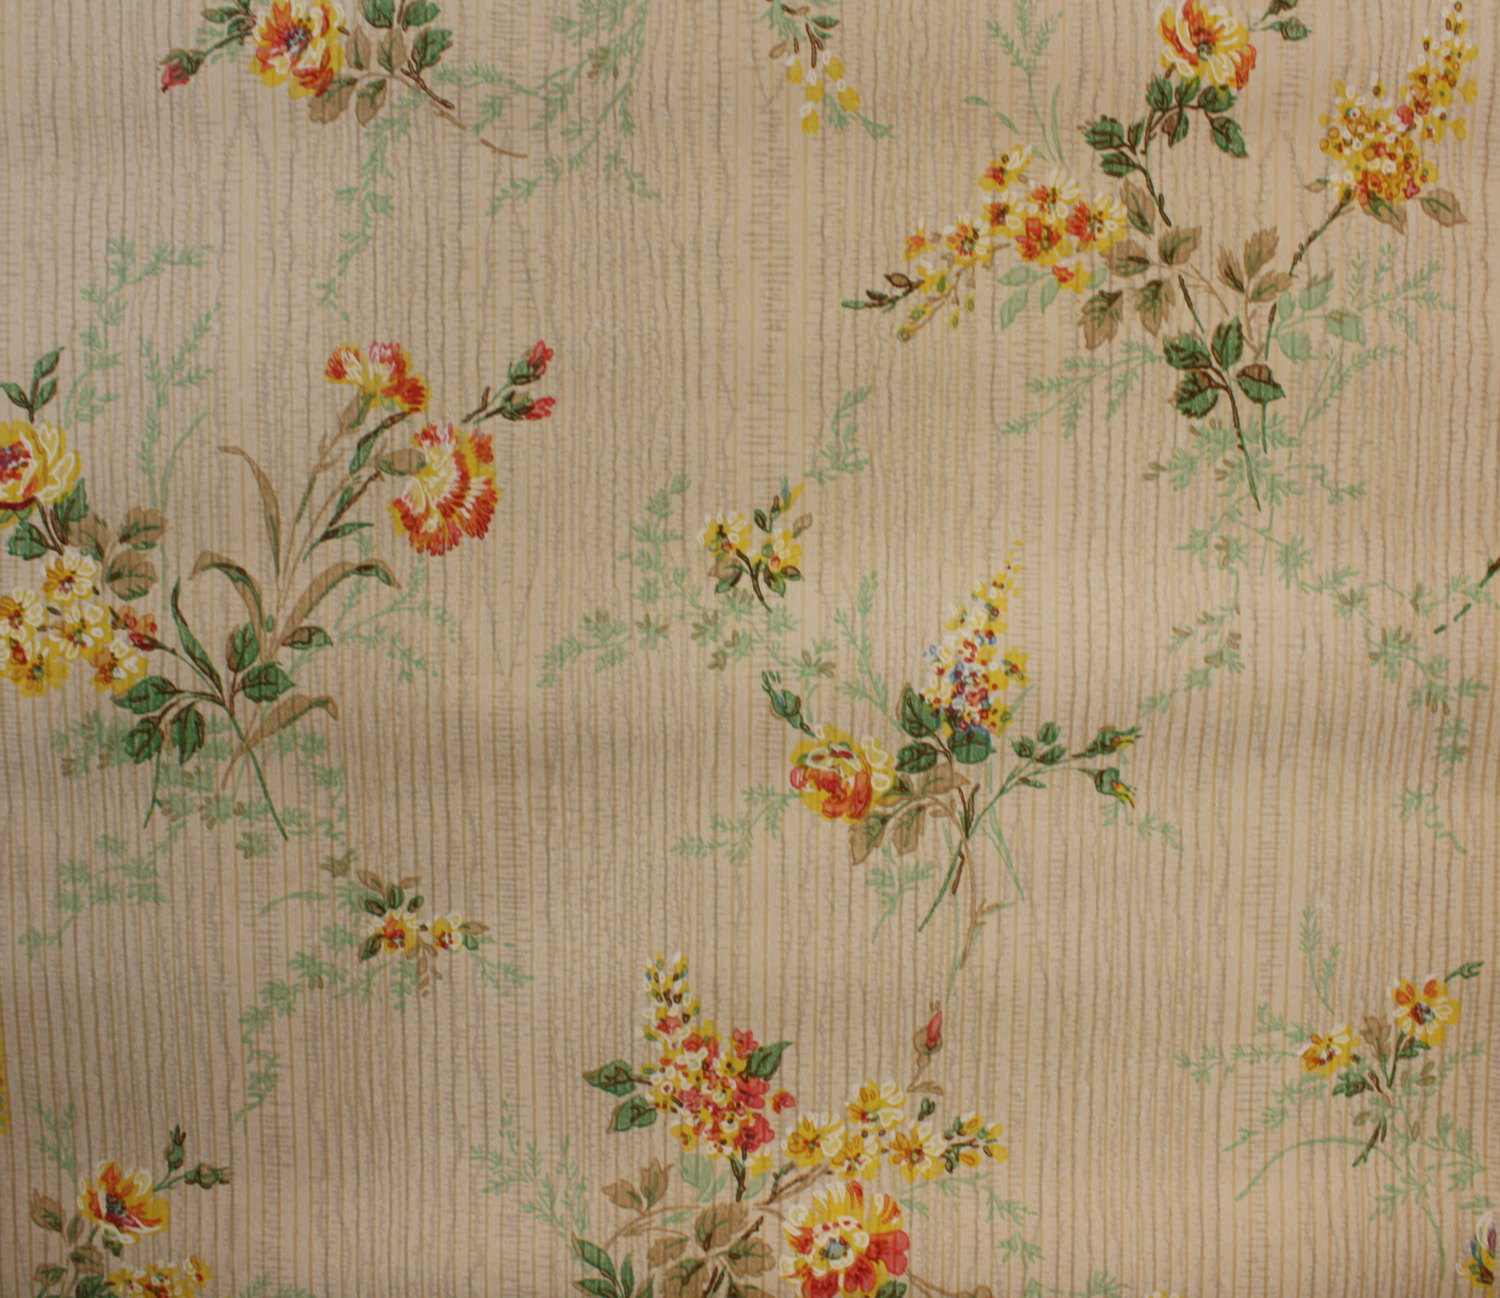 1930s Vintage Wallpaper Floral Wallpaper by HannahsTreasures 1500x1298